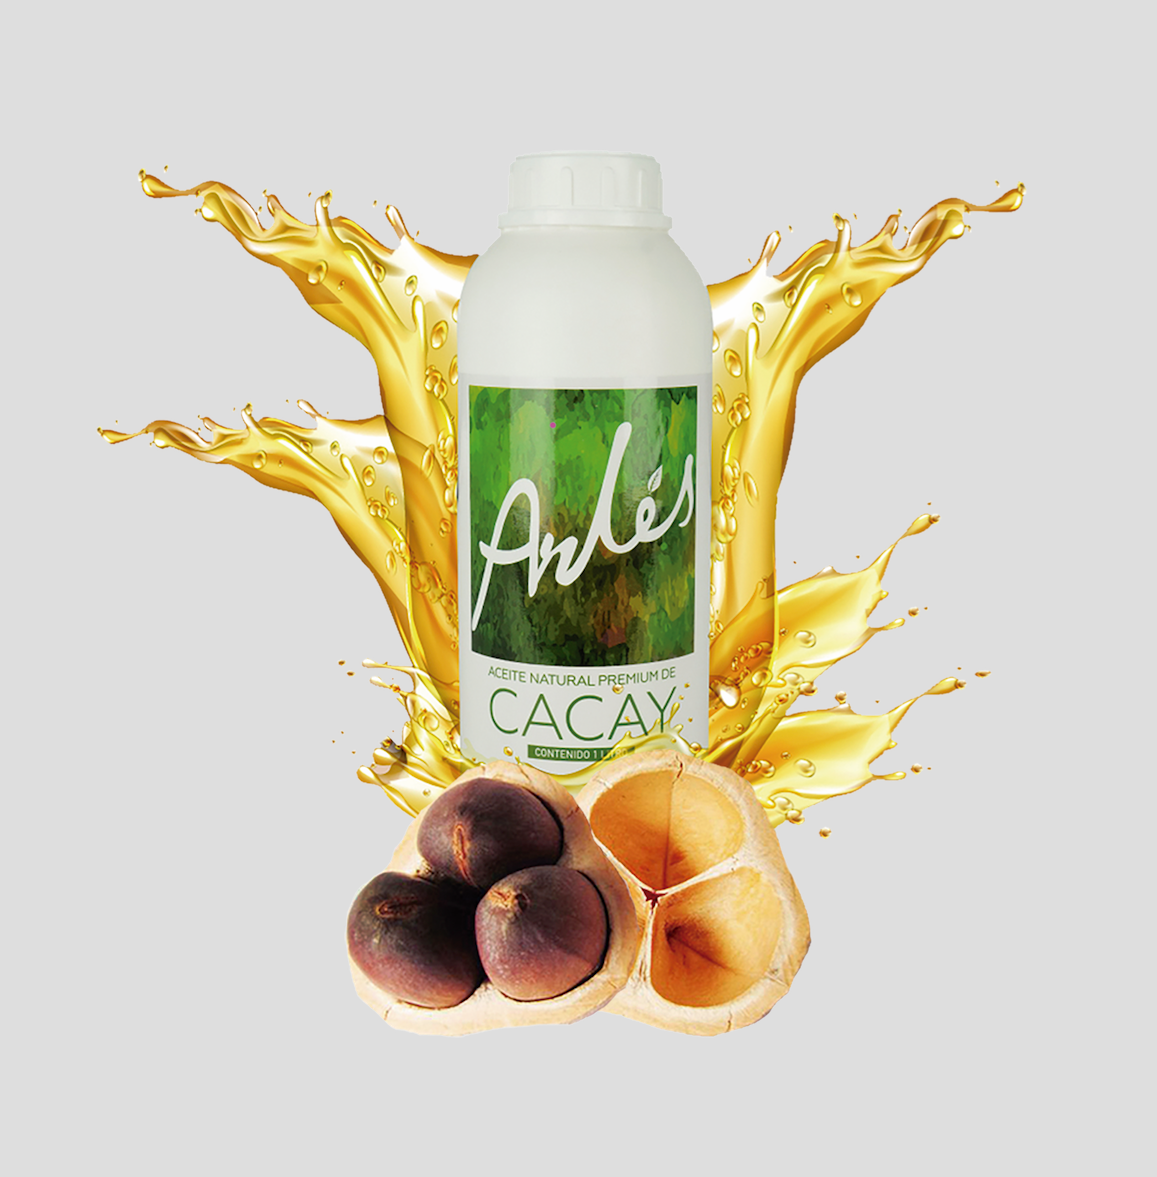 Aceite de Cacay Arlés Organics 1 litro